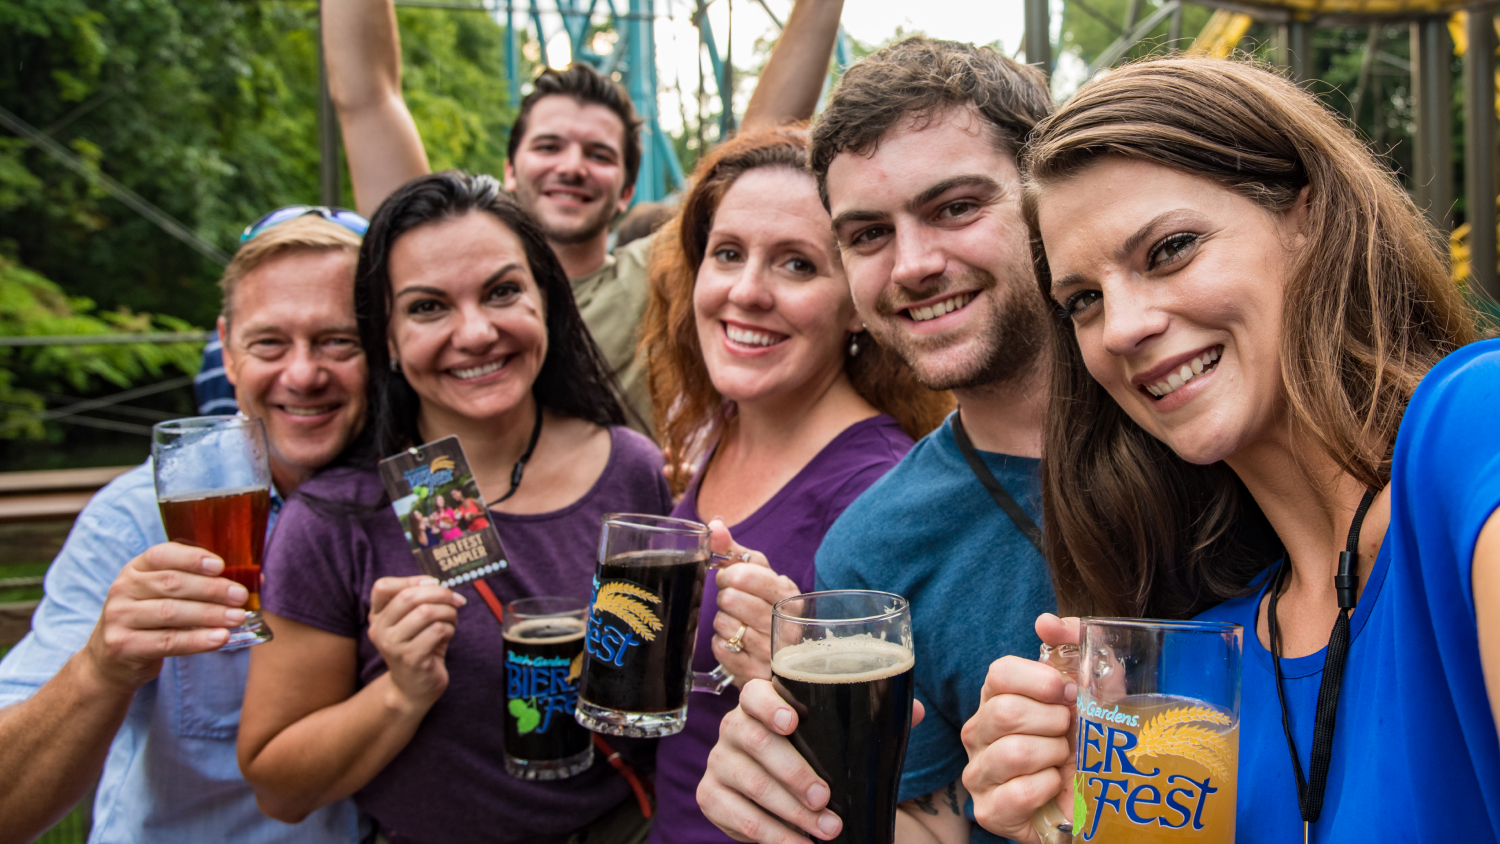 A large group of friends enjoying Bier Fest at Busch Gardens Williamsburg.